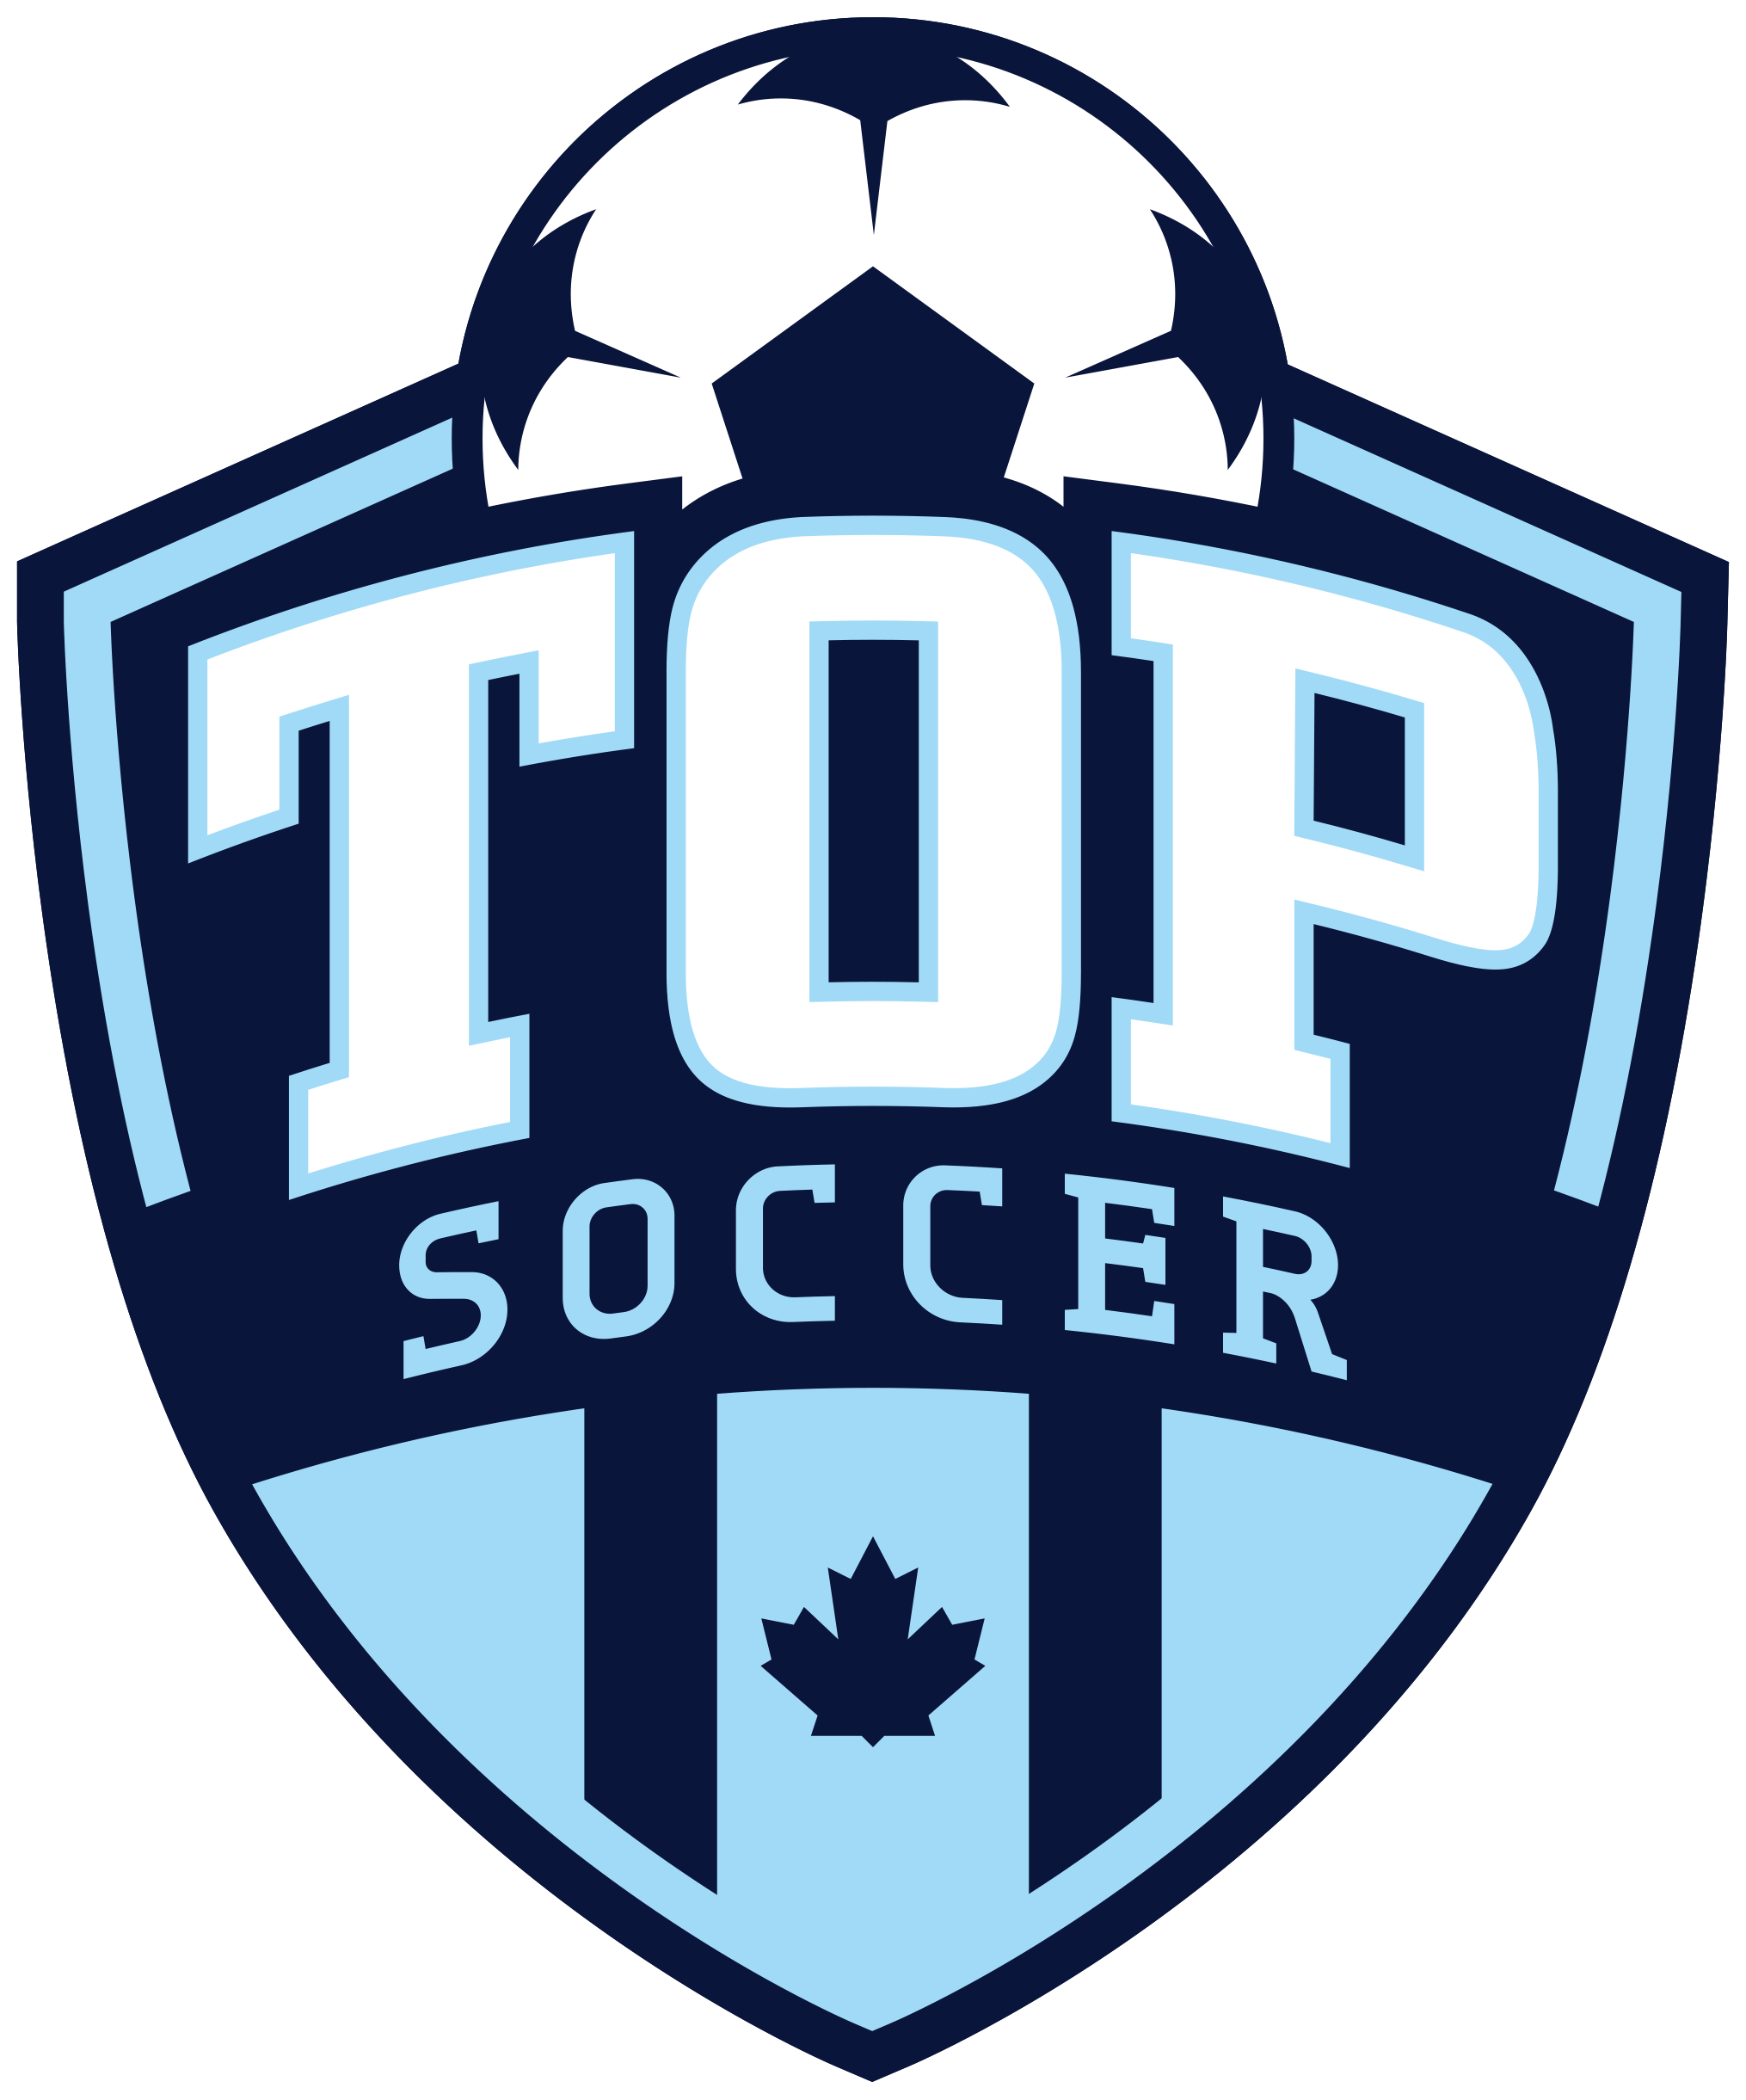 TOP Soccer Logo (1)